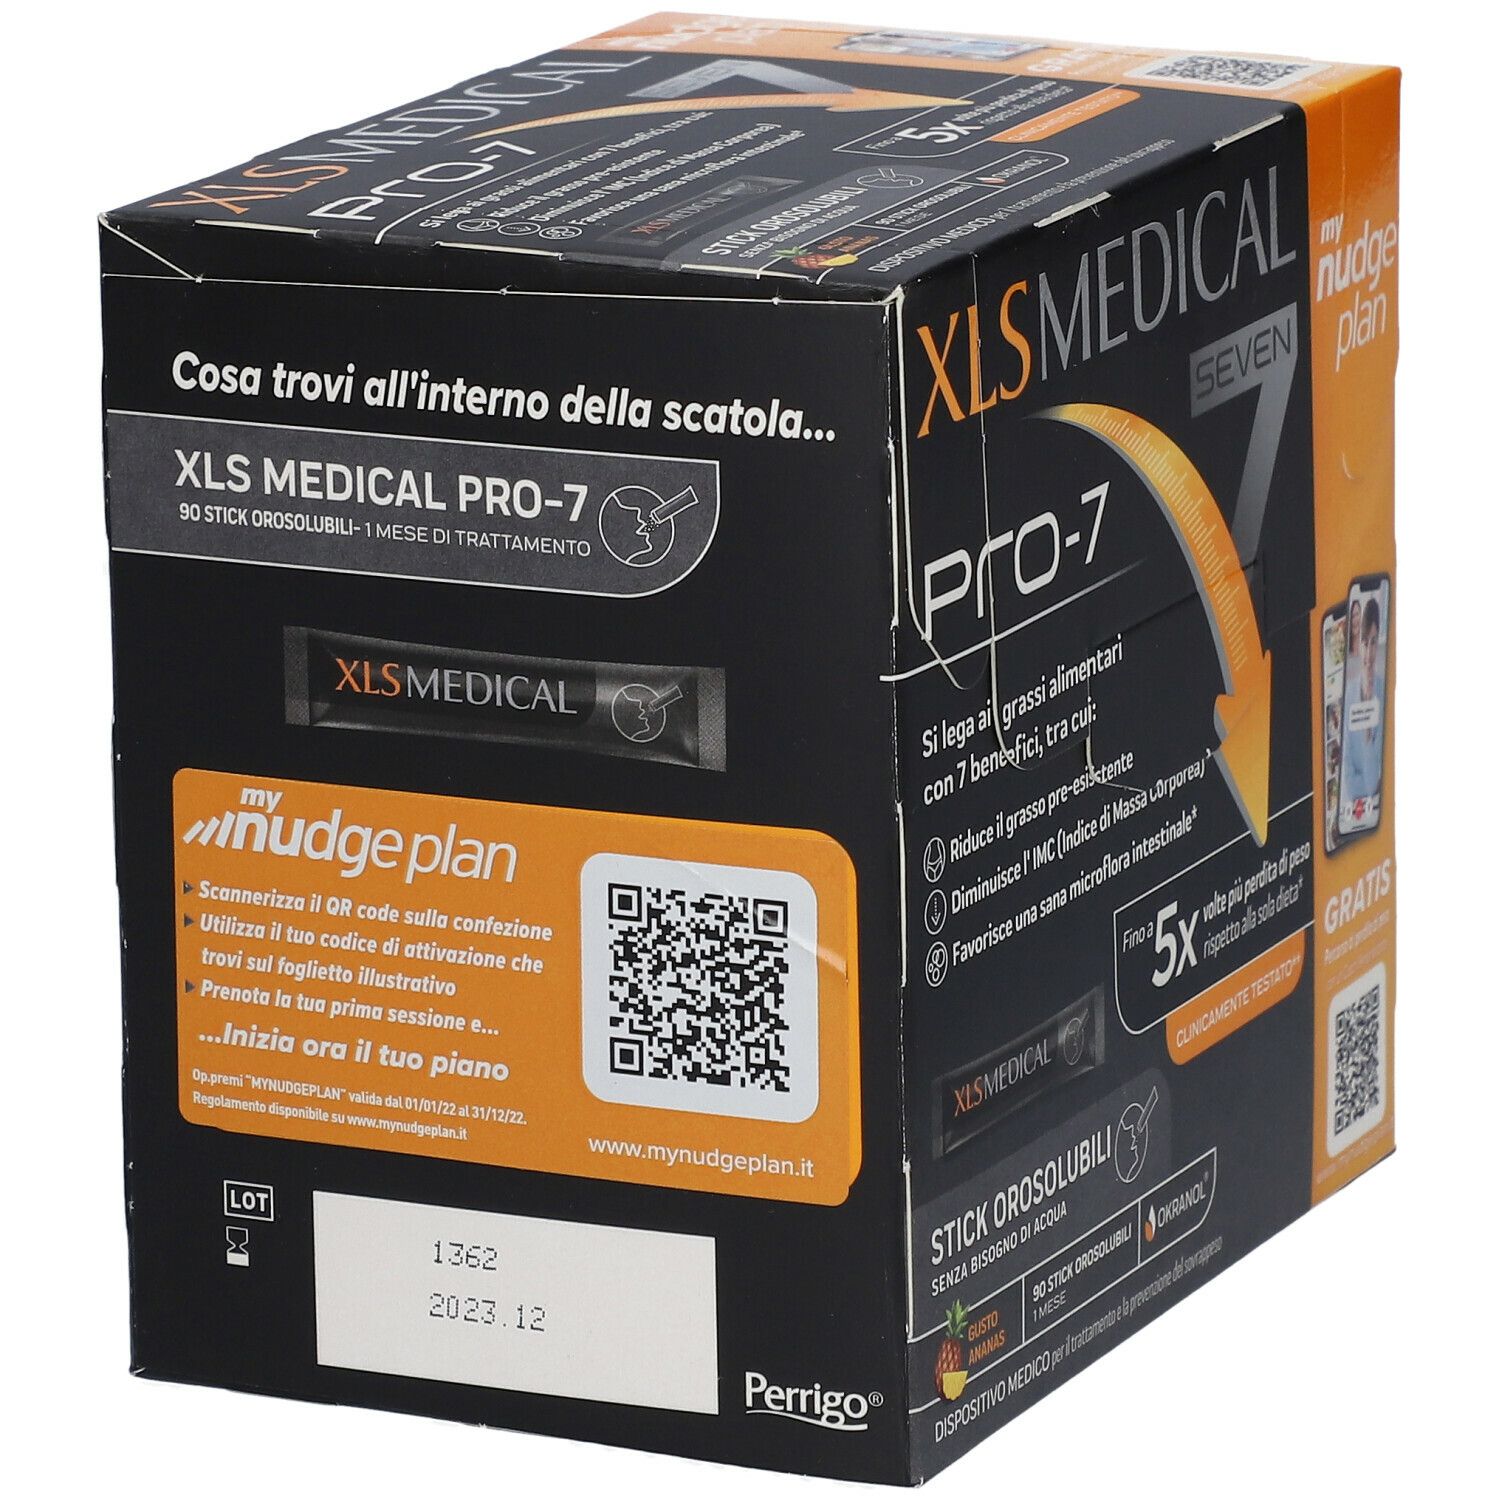 XL-S MEDICAL PRO-7